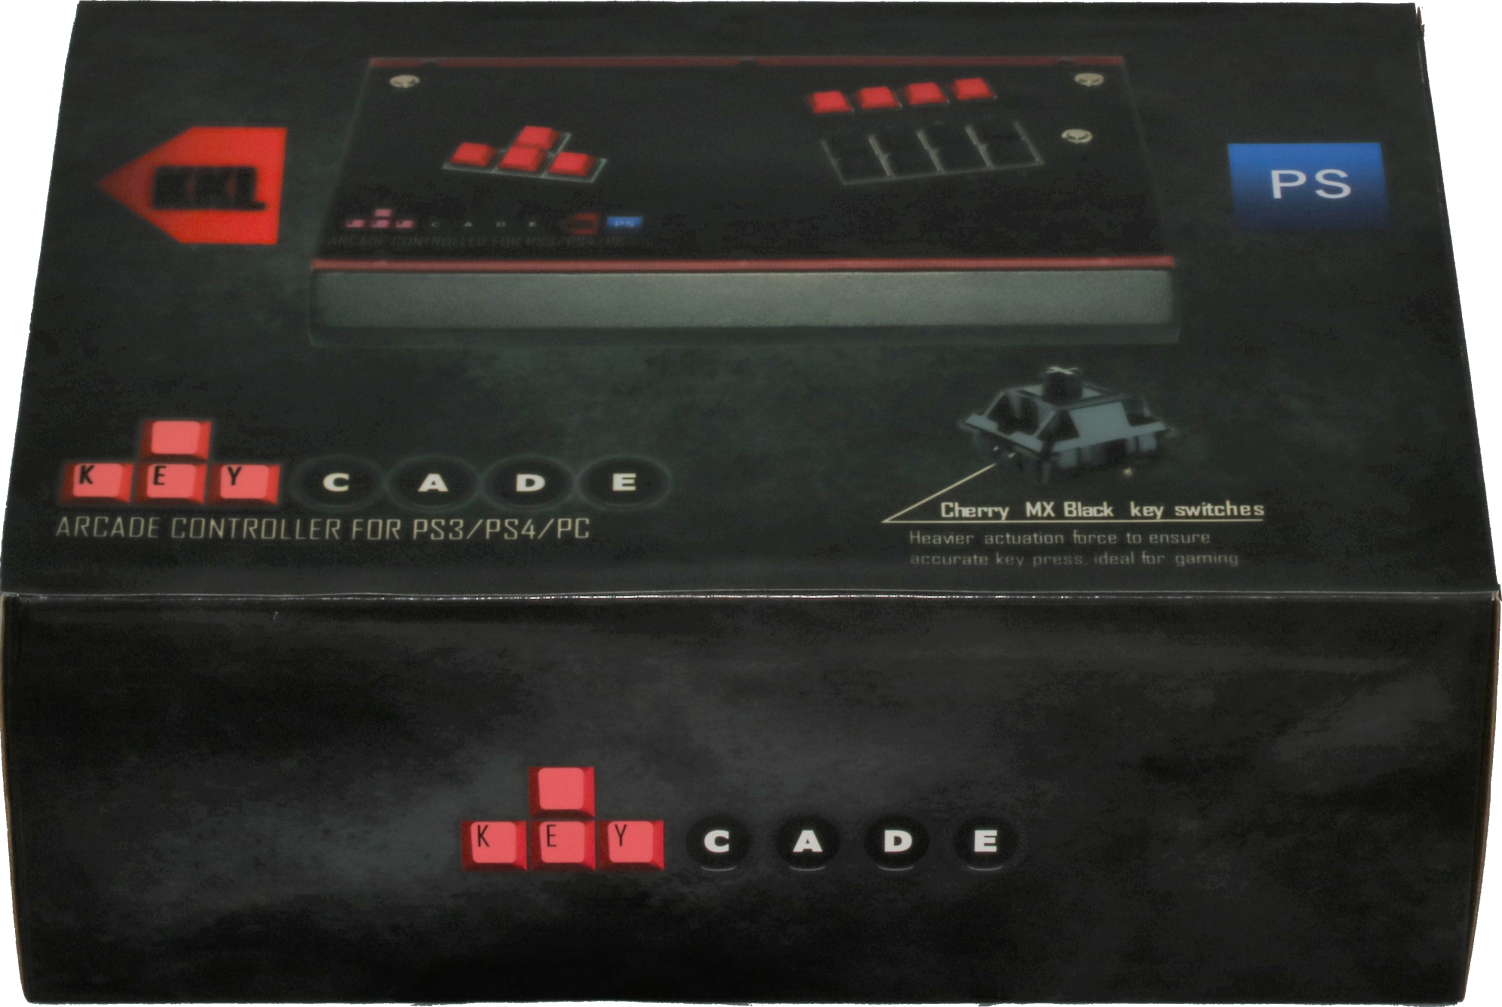 KeyCade KKL PS arcade controller